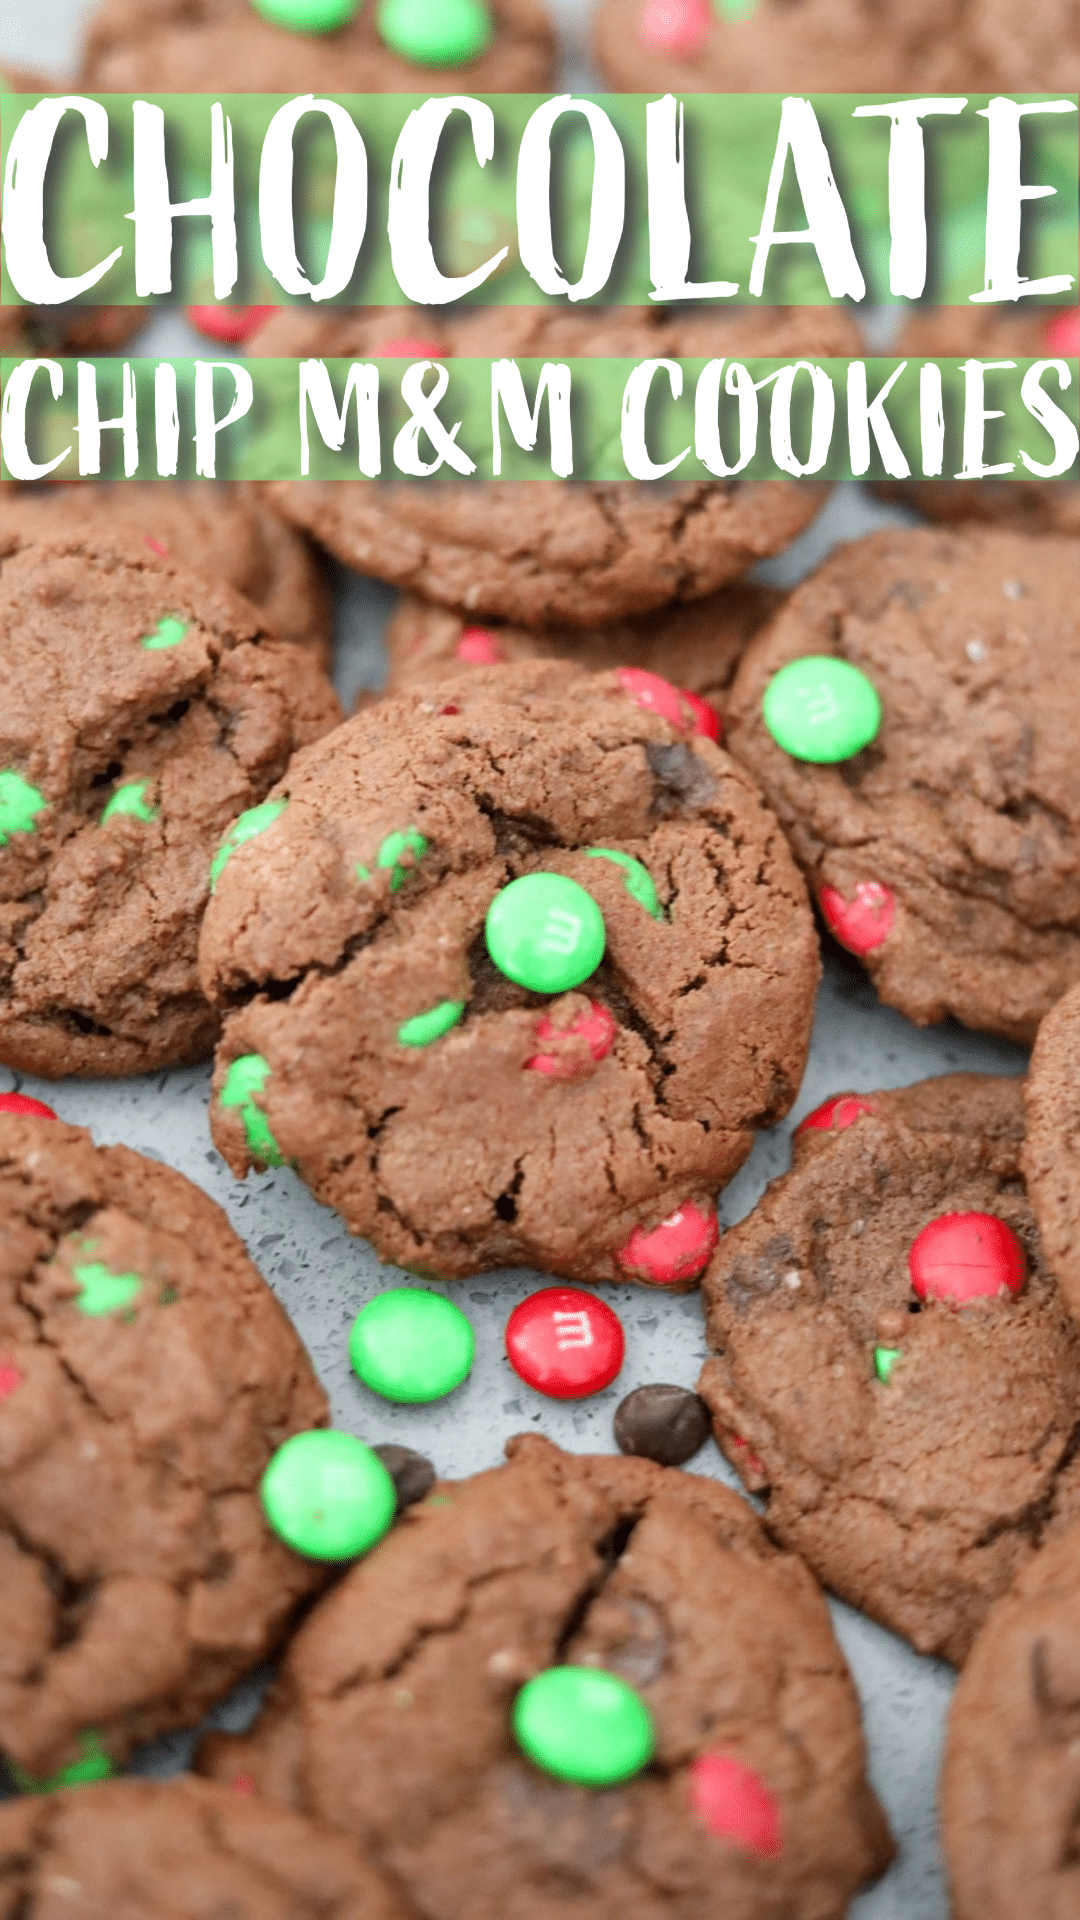 Chocolate Chip M&M Cookies pinterest pin